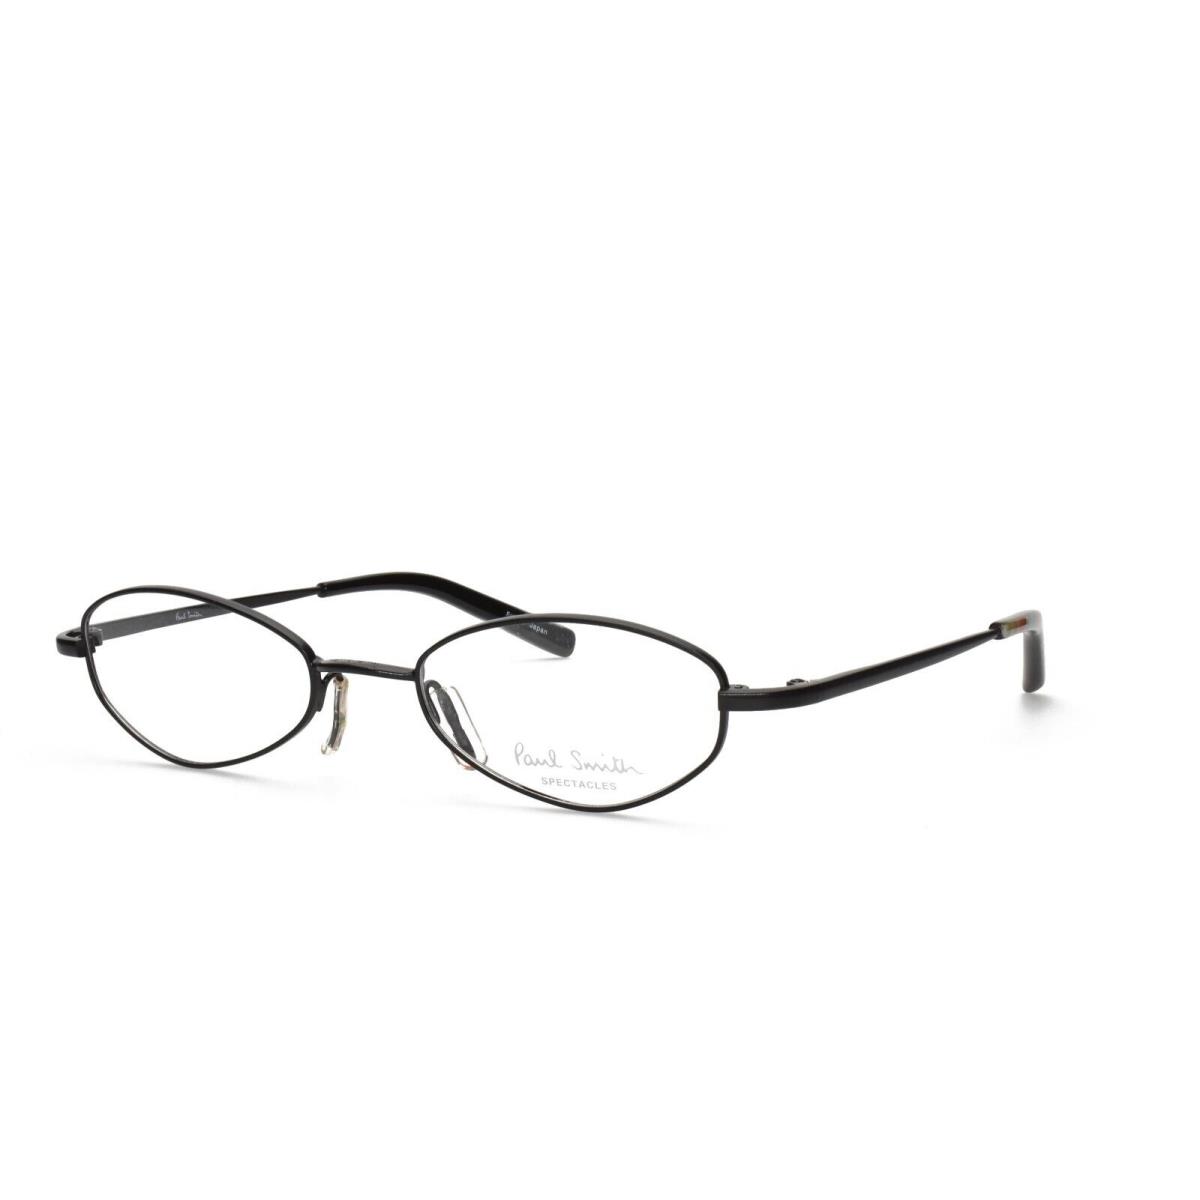 Paul Smith 198 OX 48-19-132 Black Vtg Vintage Eyeglasses Frames